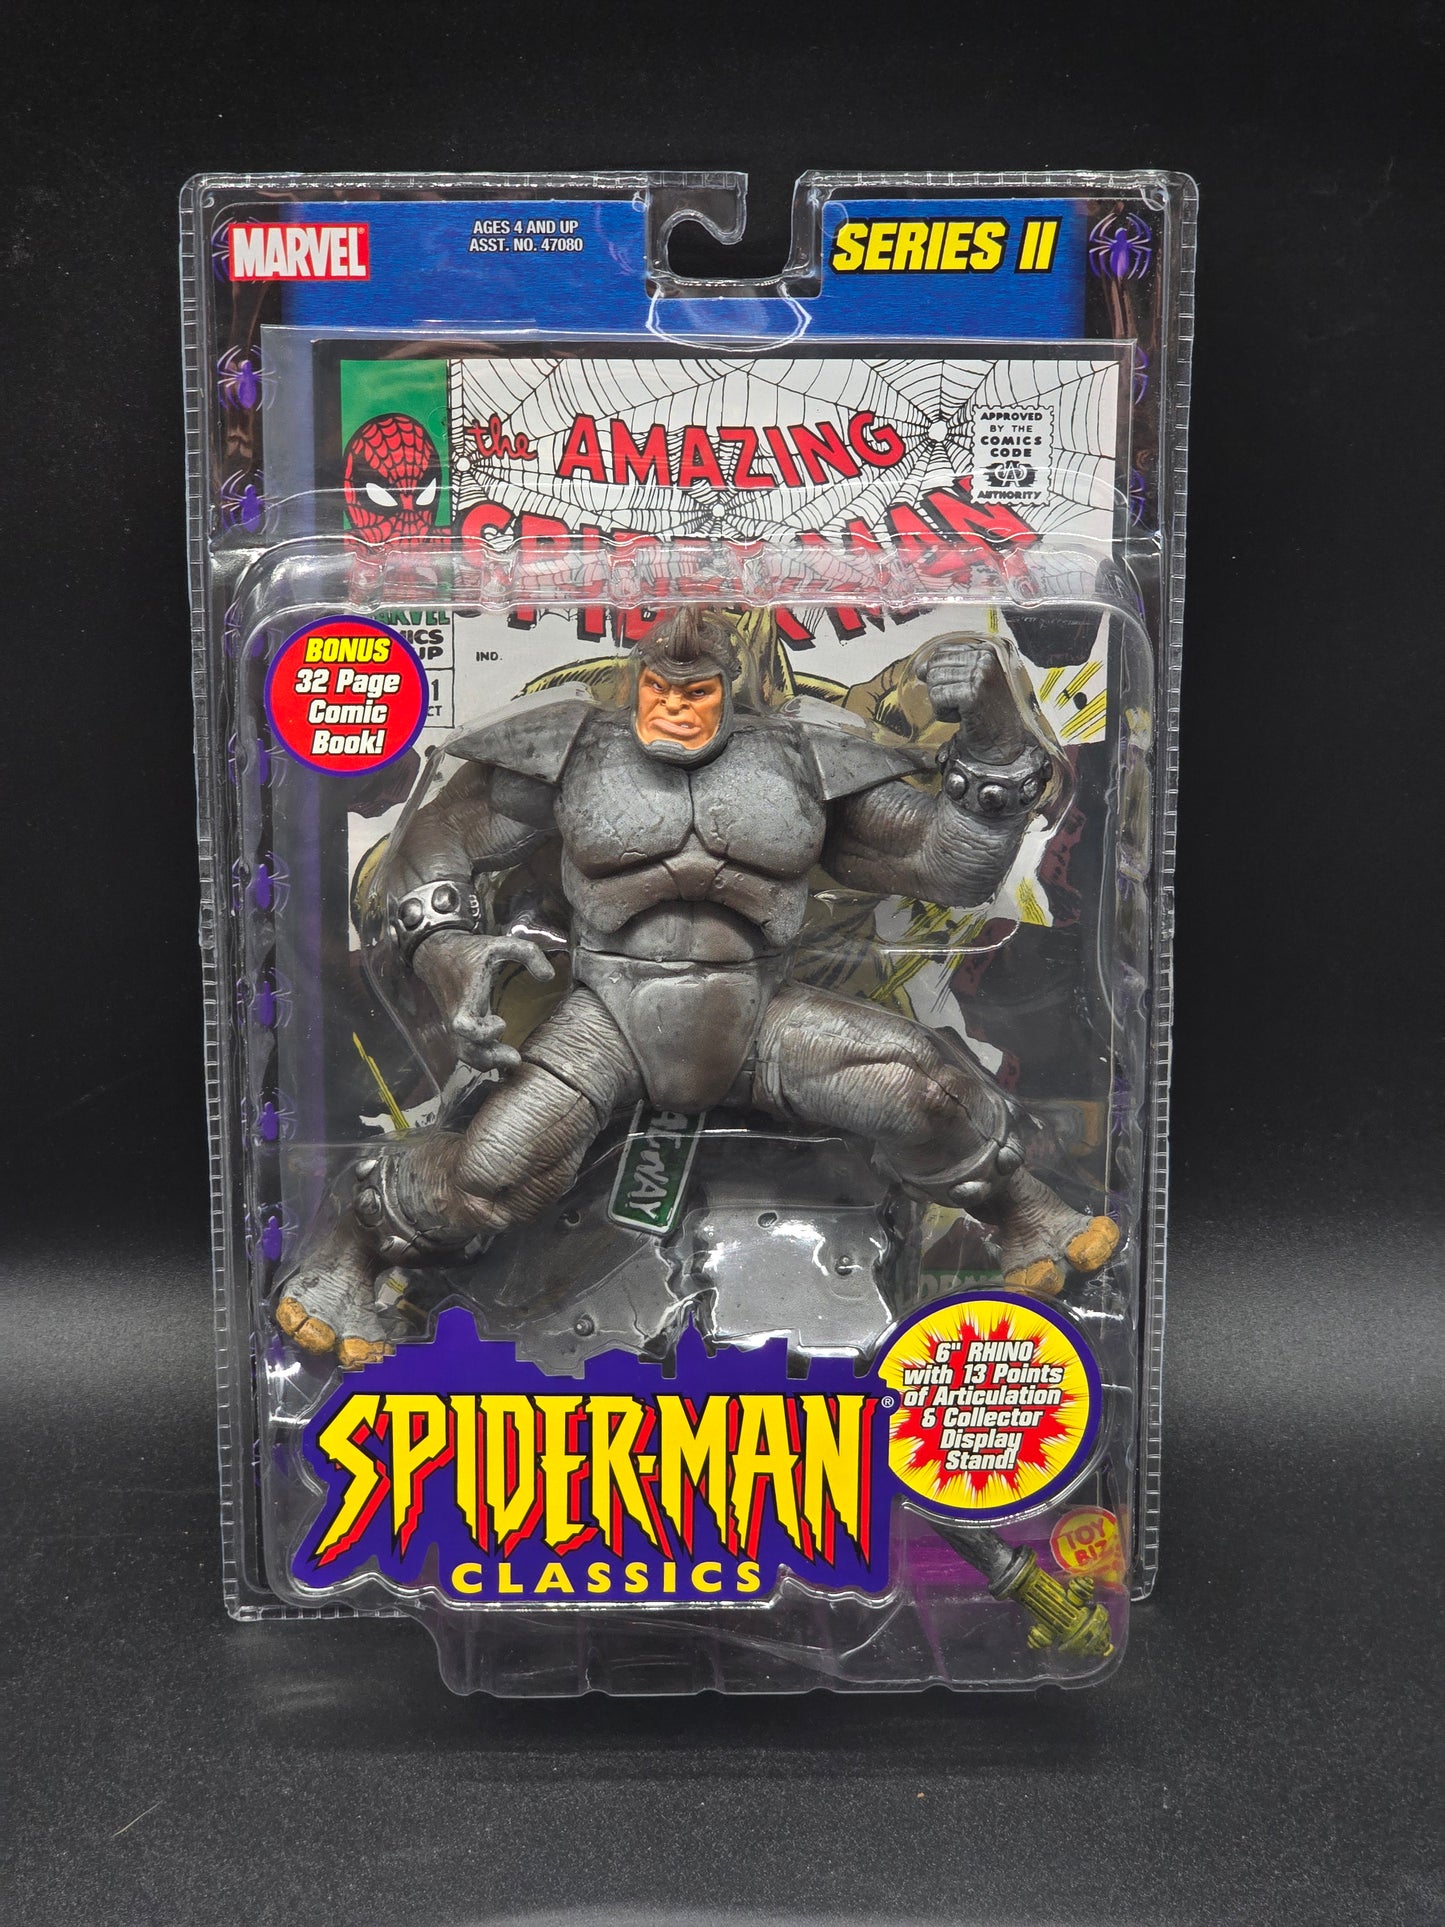 Rhino Marvel Legends Spider-Man Classics series 2, 2001